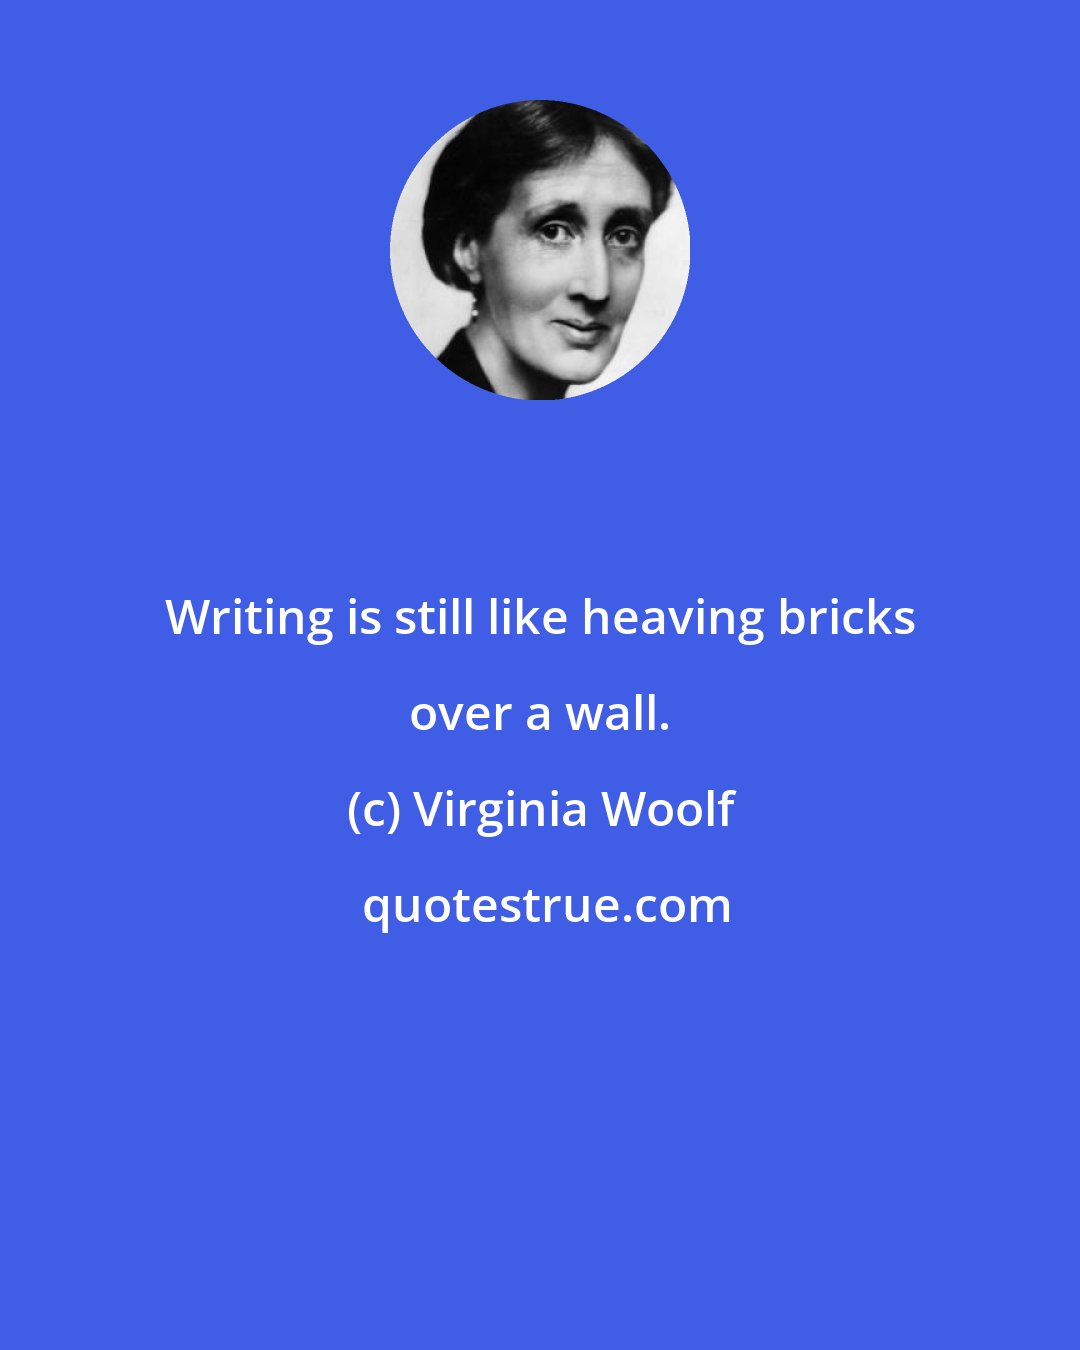 Virginia Woolf: Writing is still like heaving bricks over a wall.